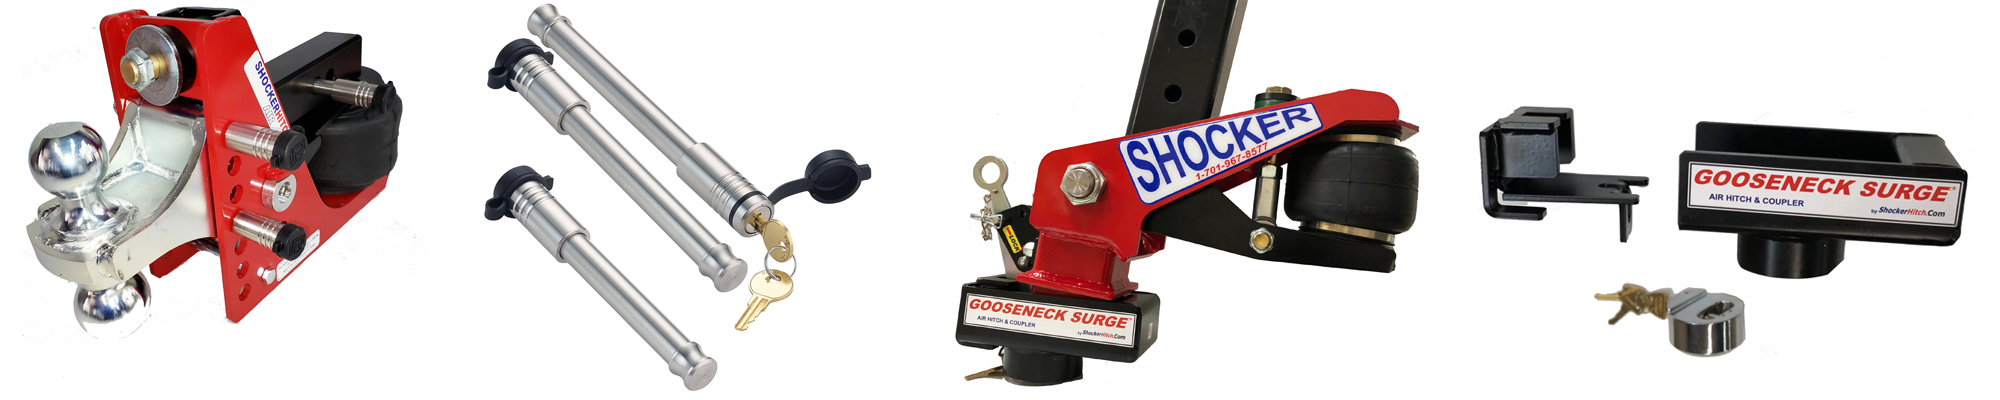 Hitch Locks
Locks for Shocker Bumper Hitches & Gooseneck